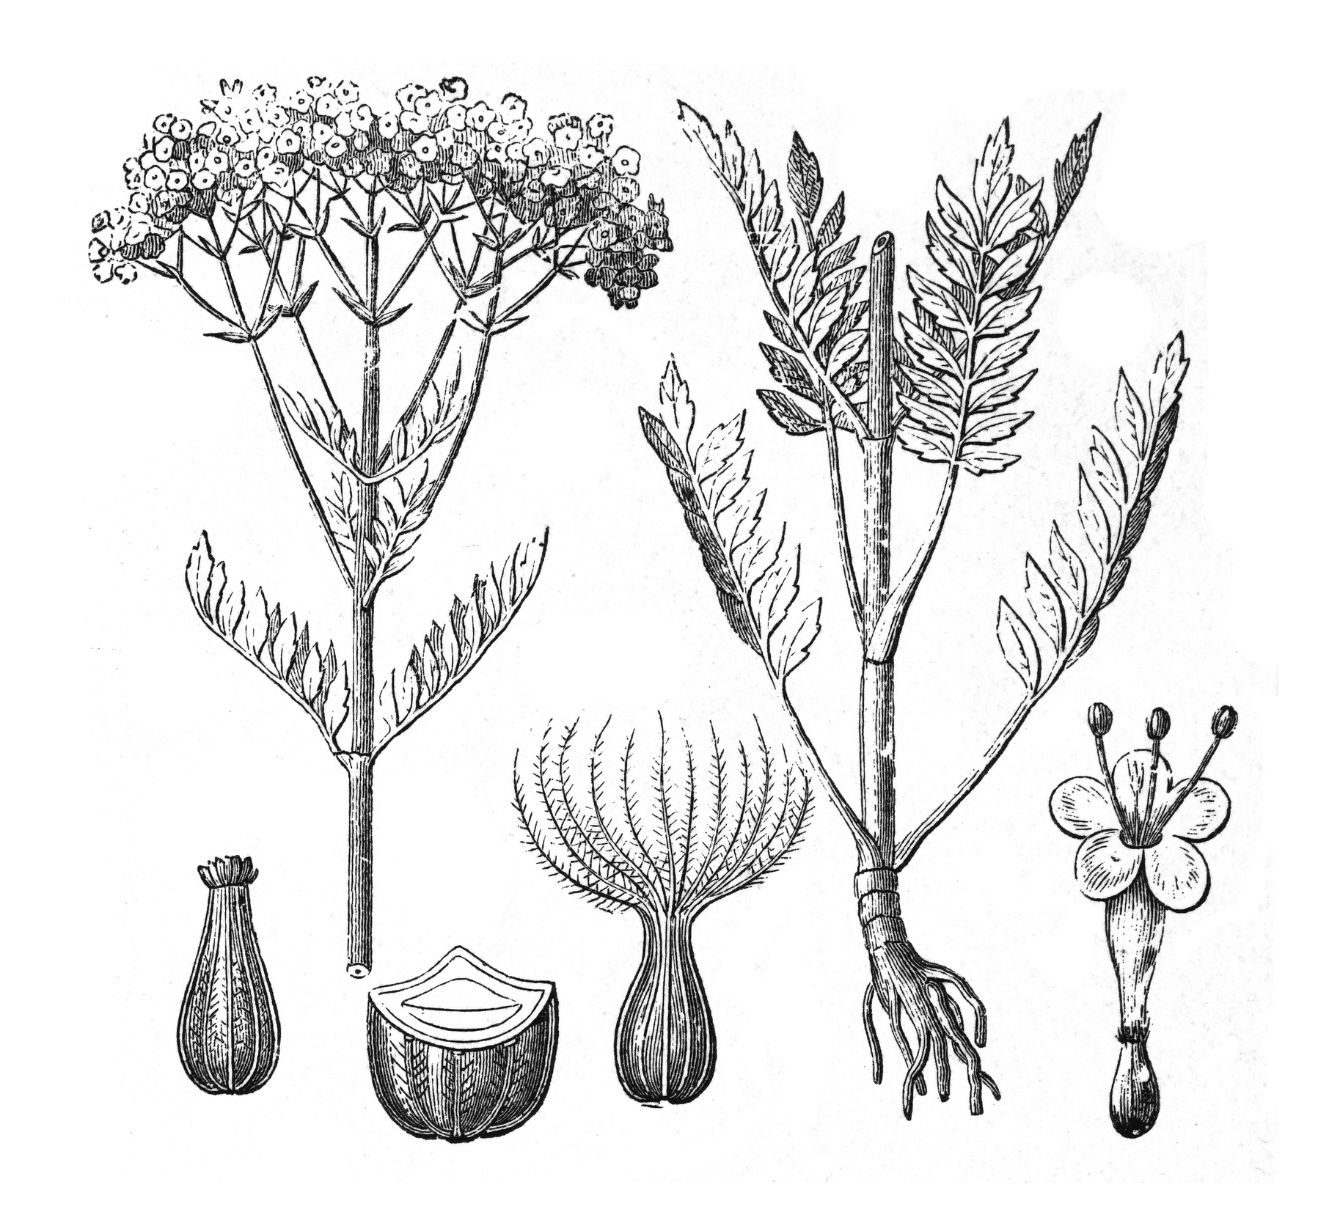 Baldrian - Herbarium